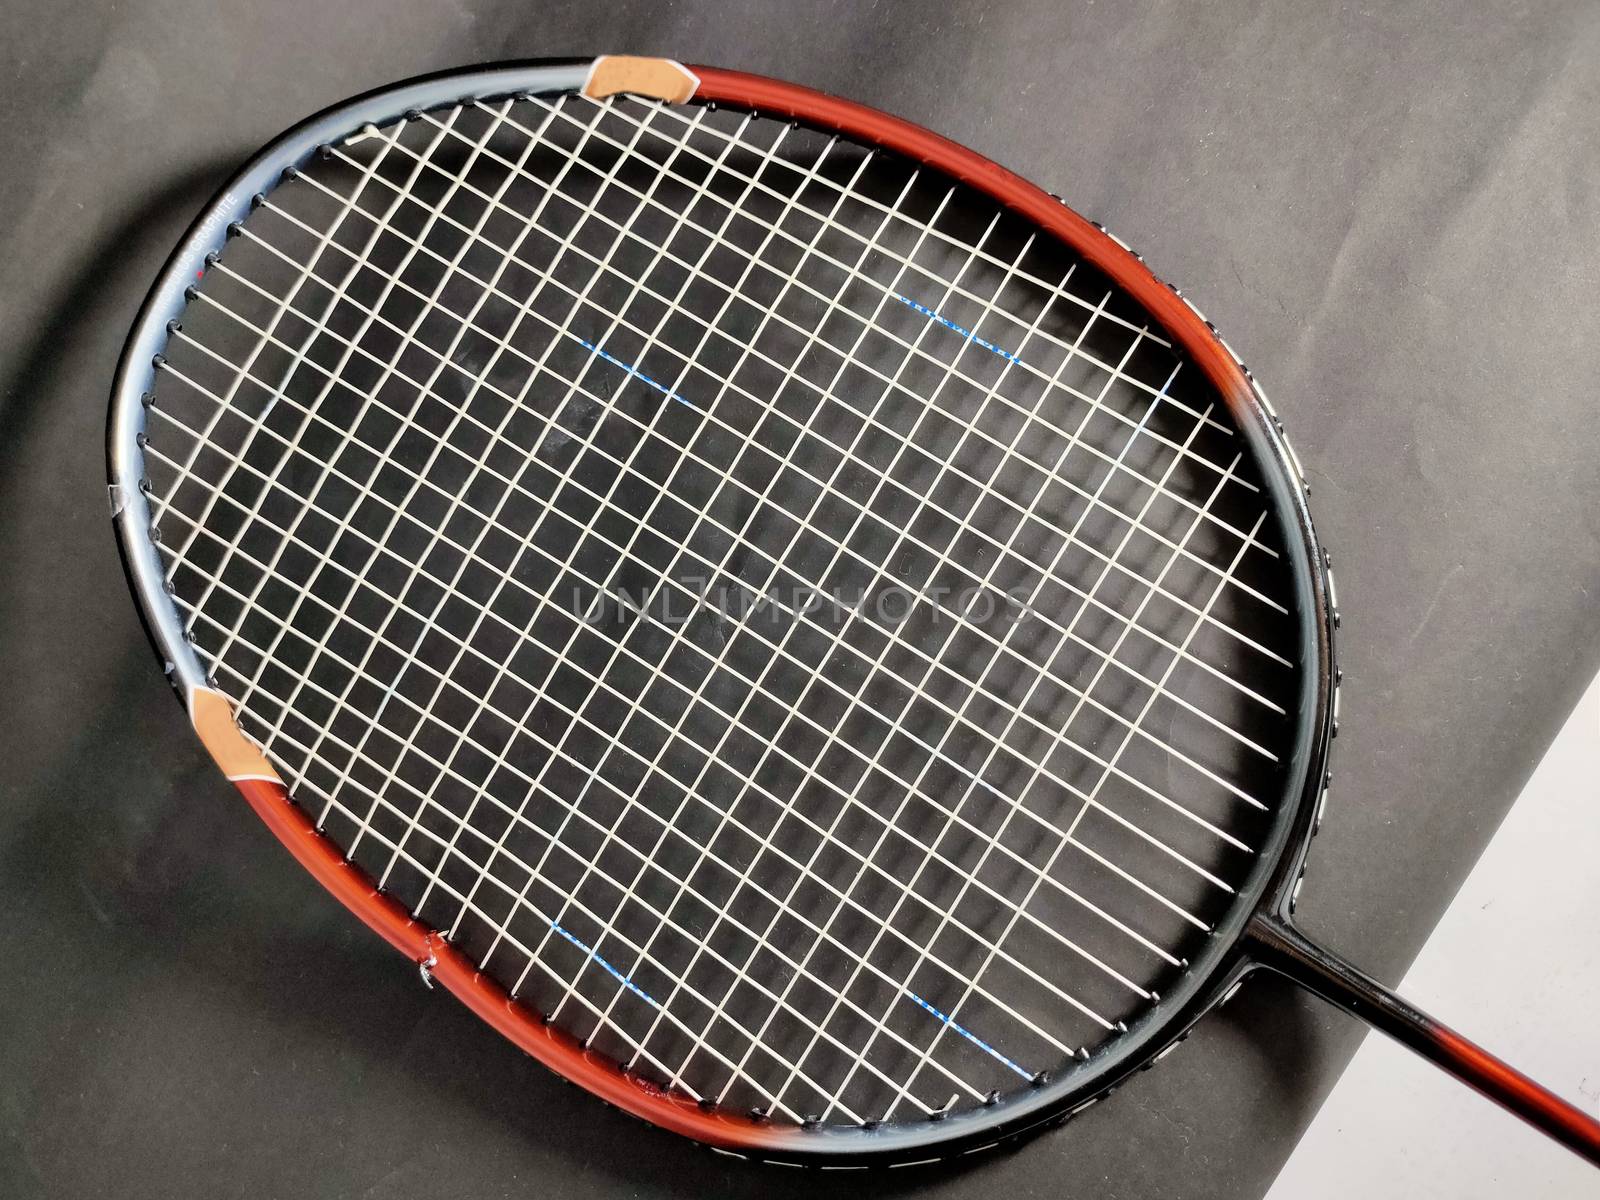 Broken badminton racket on black background by peerapixs